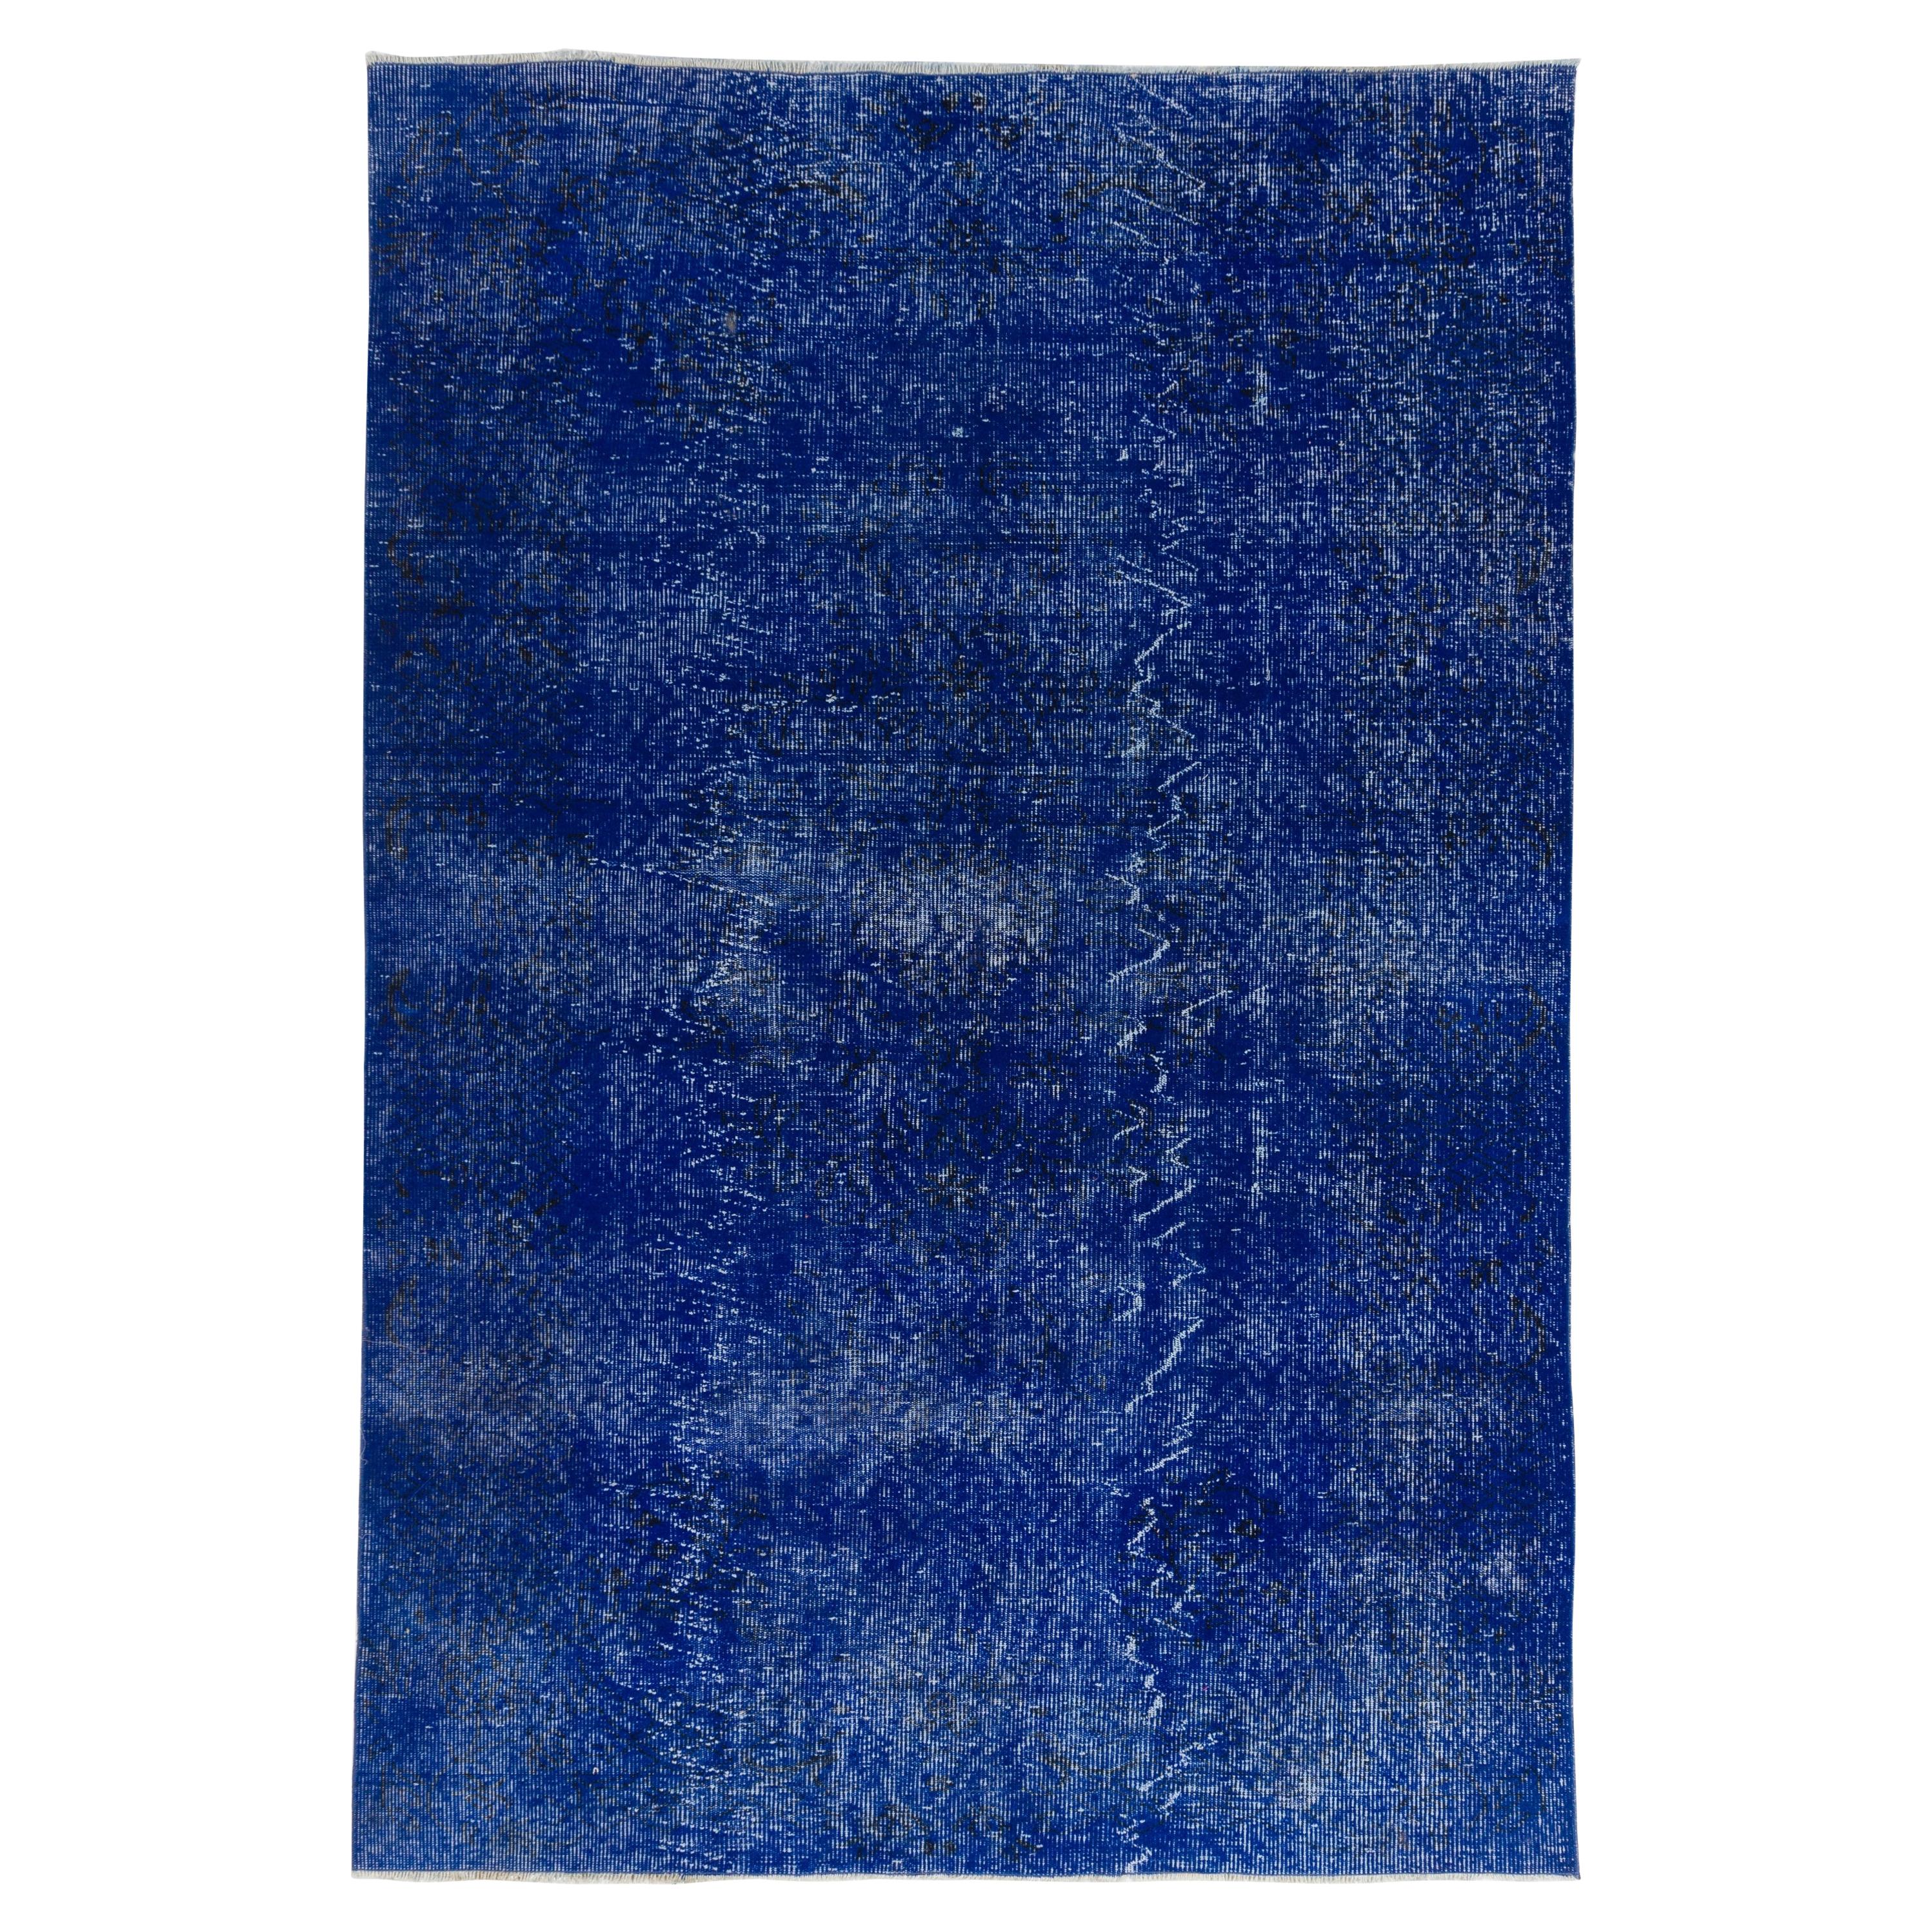 6.4x9.6 Ft Handmade Area Rug in Blue. Great 4 Modern Interior. Turkish Carpet